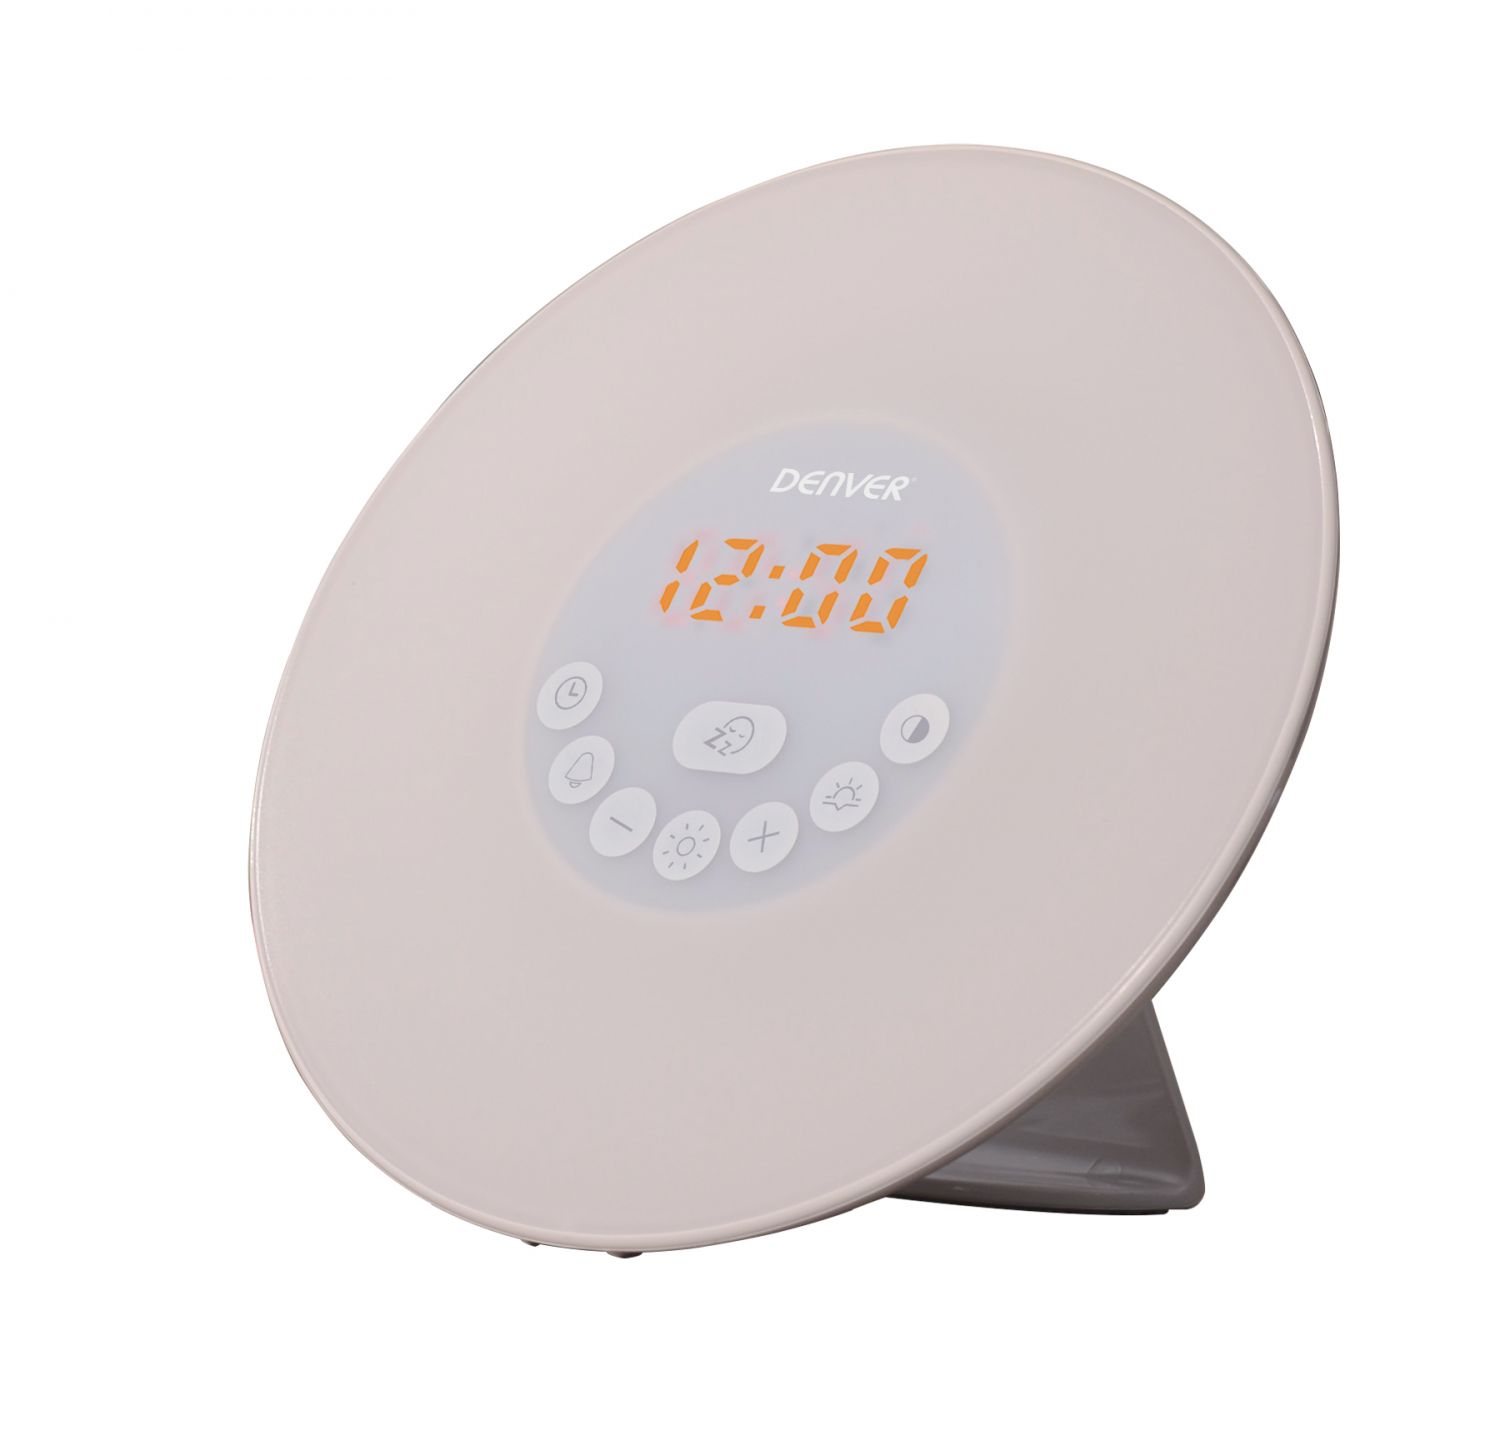 111131200070 - Despertador Denver Electronic CRL-330NR Digital alarm clock Blanco